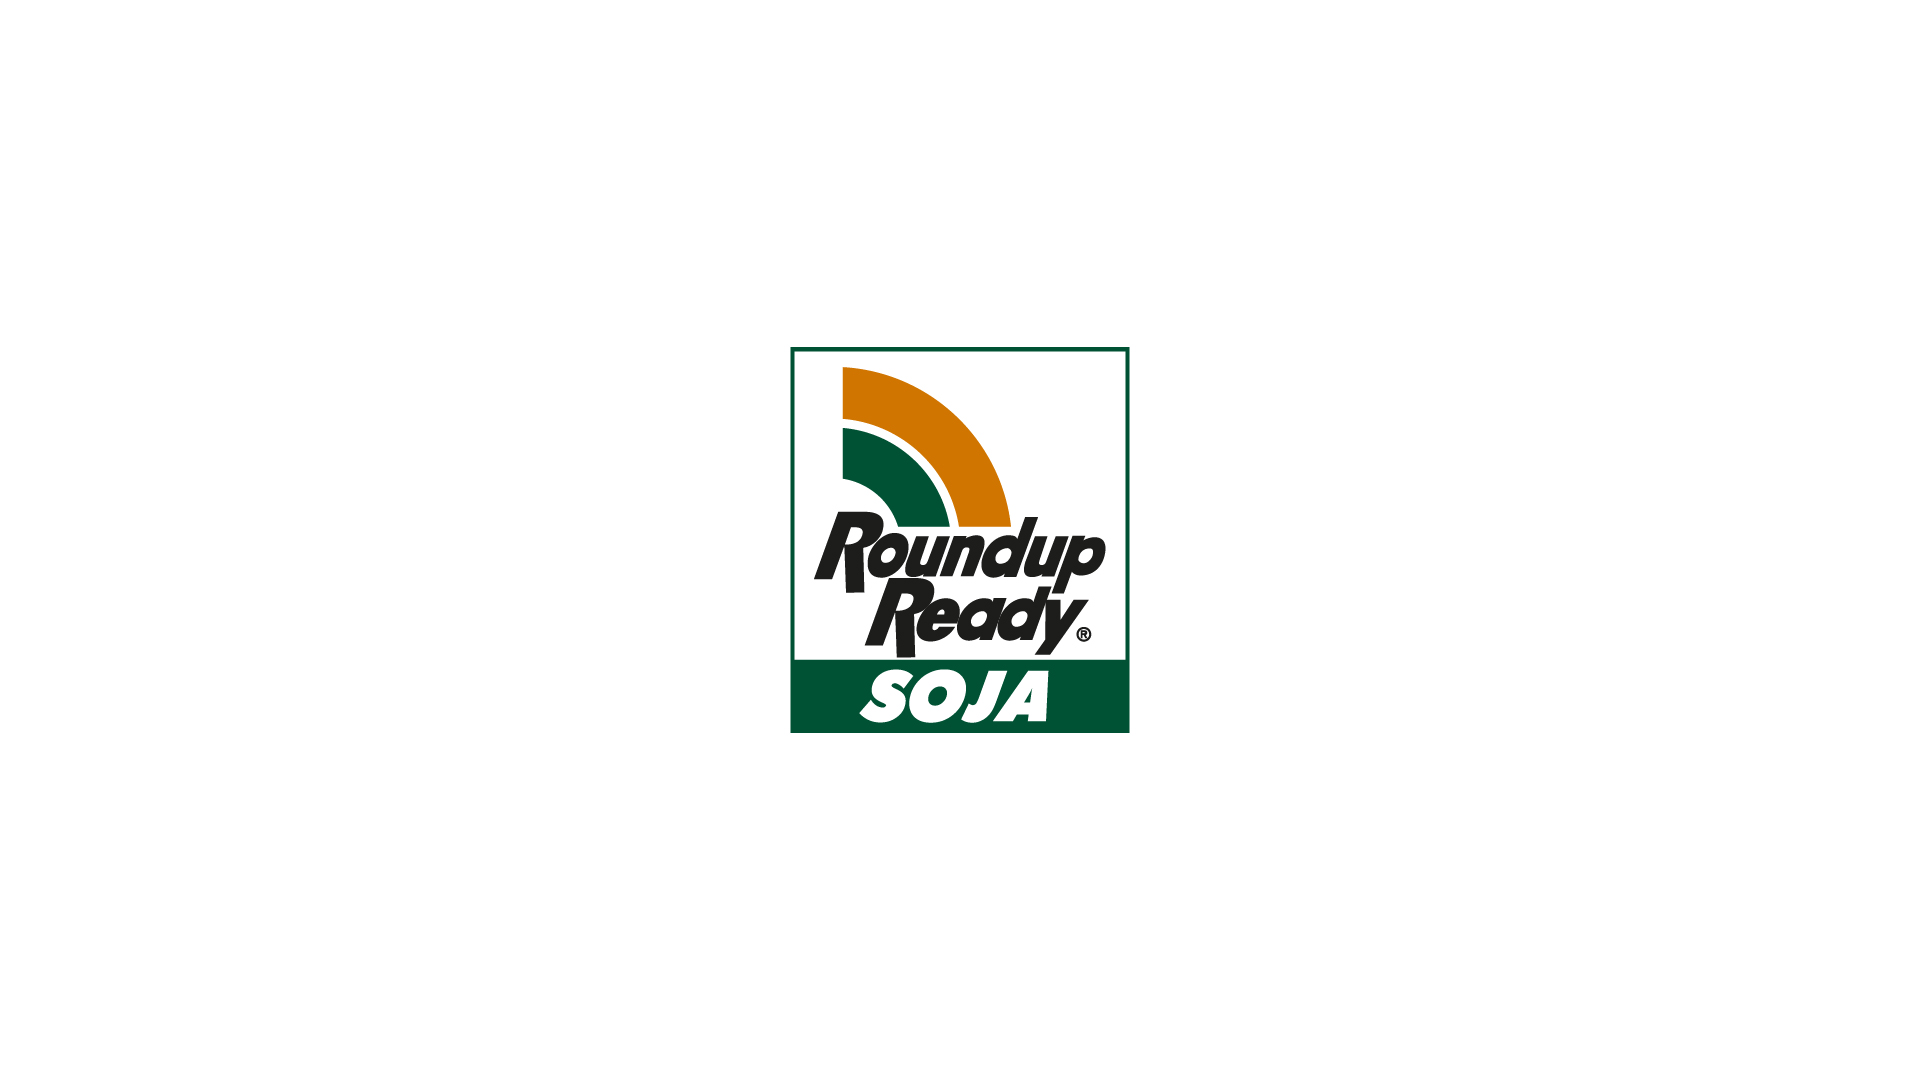 Roundup Ready Soja – Tolerância ao herbicida Glifosato.